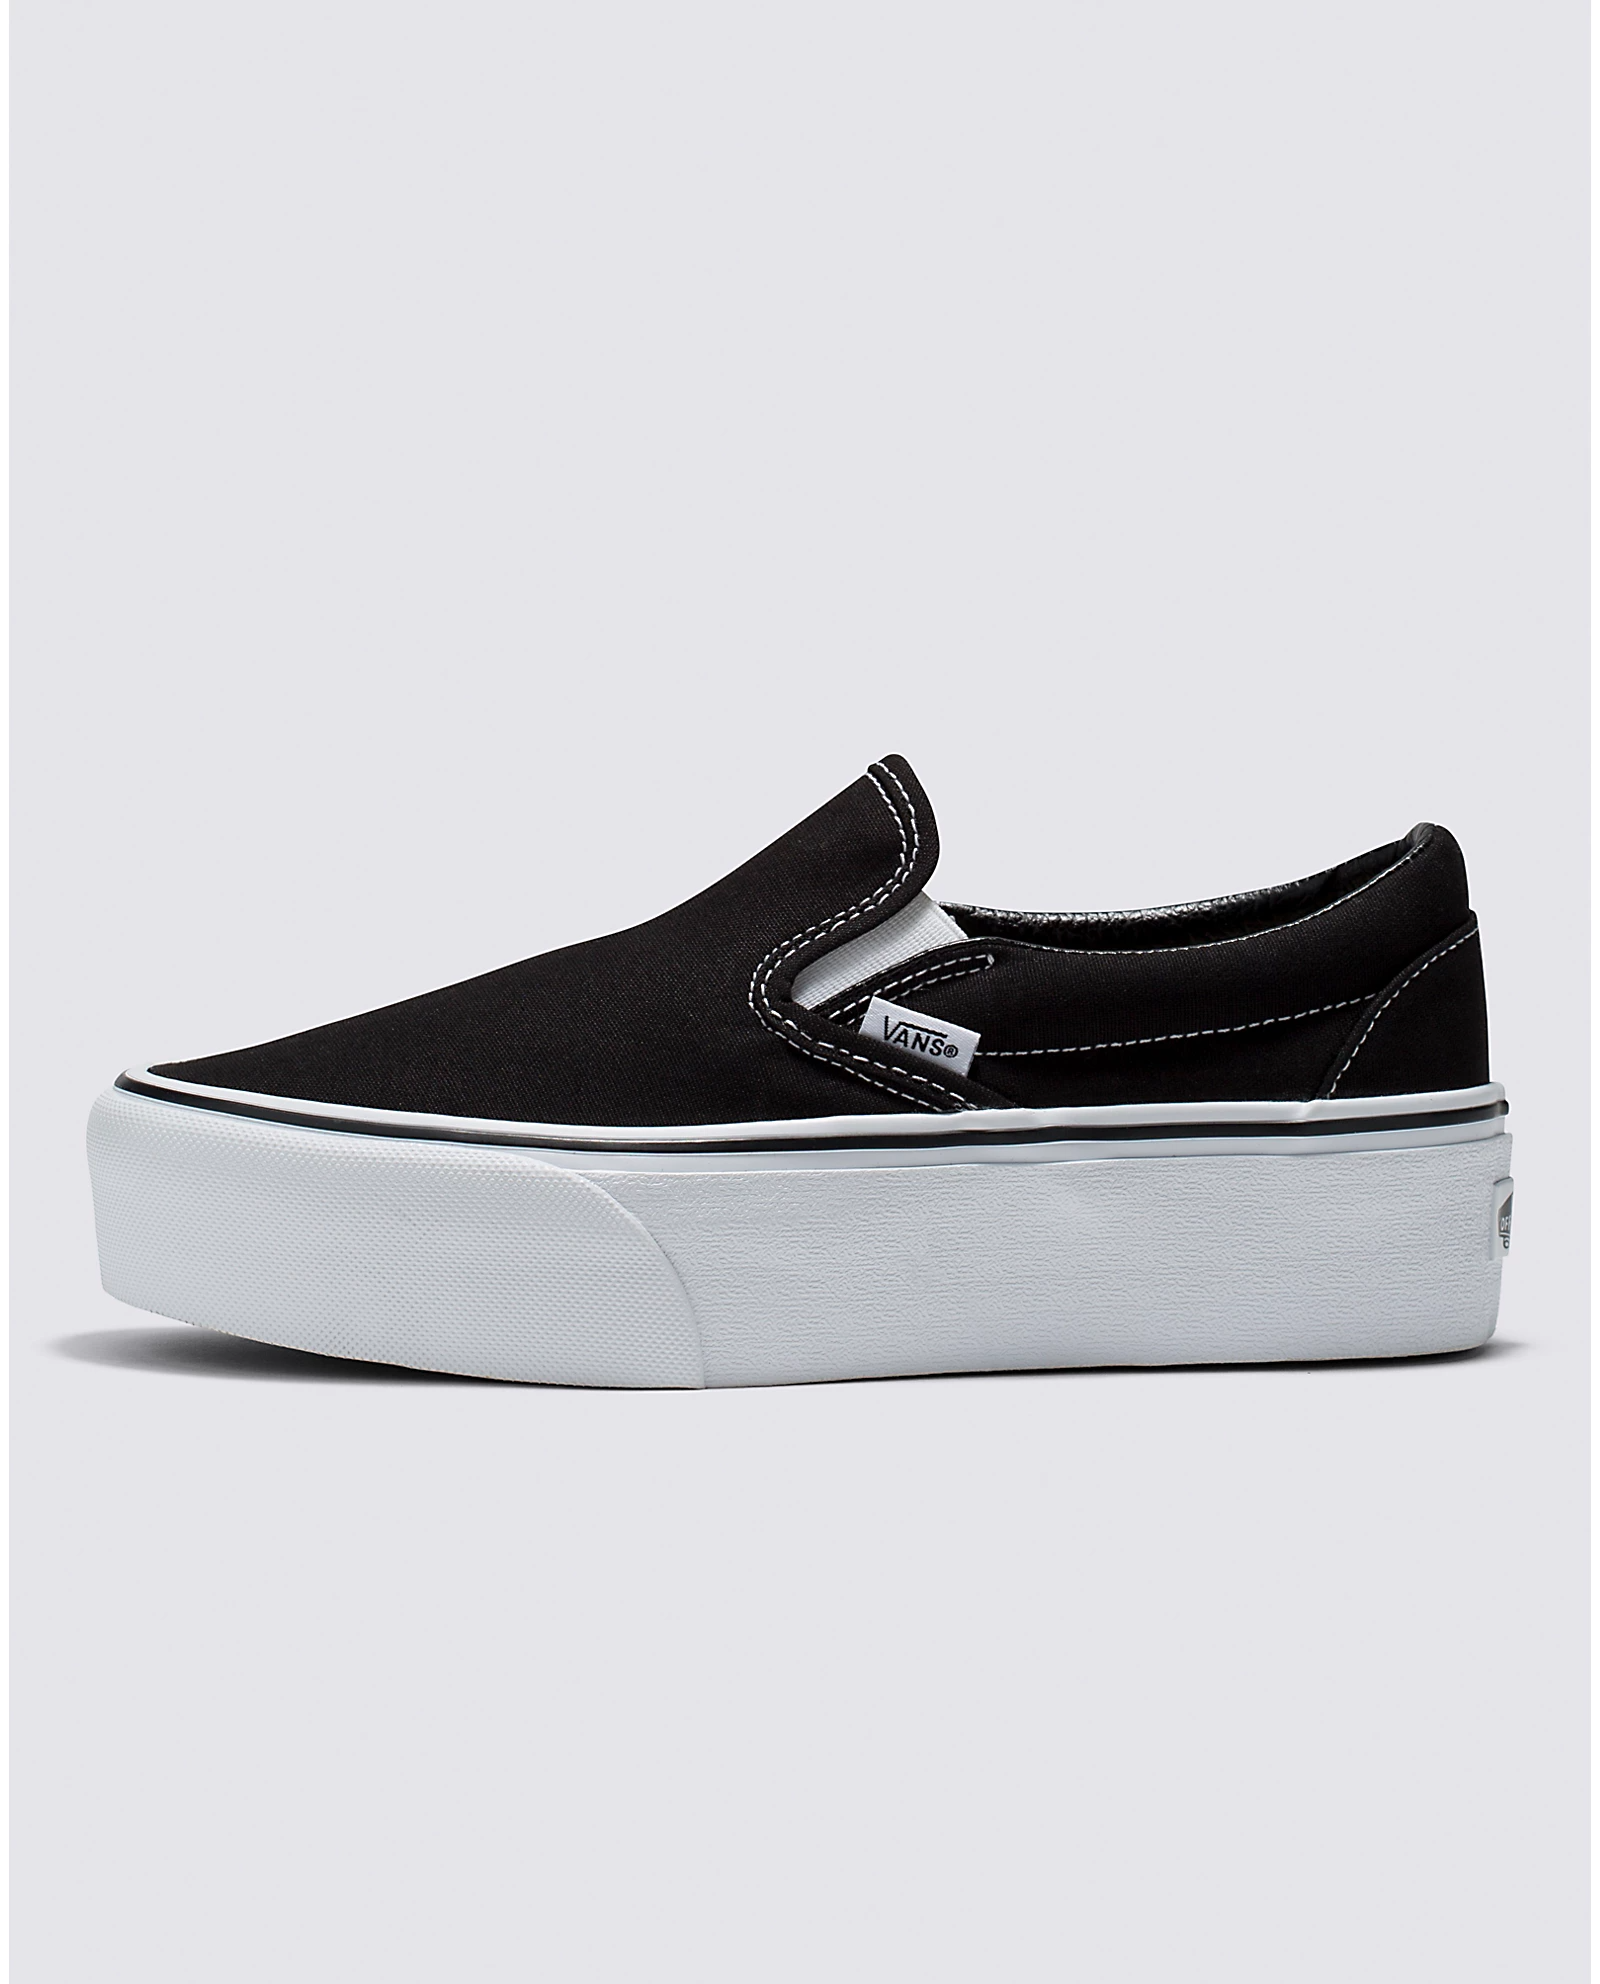 Vans Classic Slip-On Stackform Shoe Black/Classic White VN0A7Q5RBMX